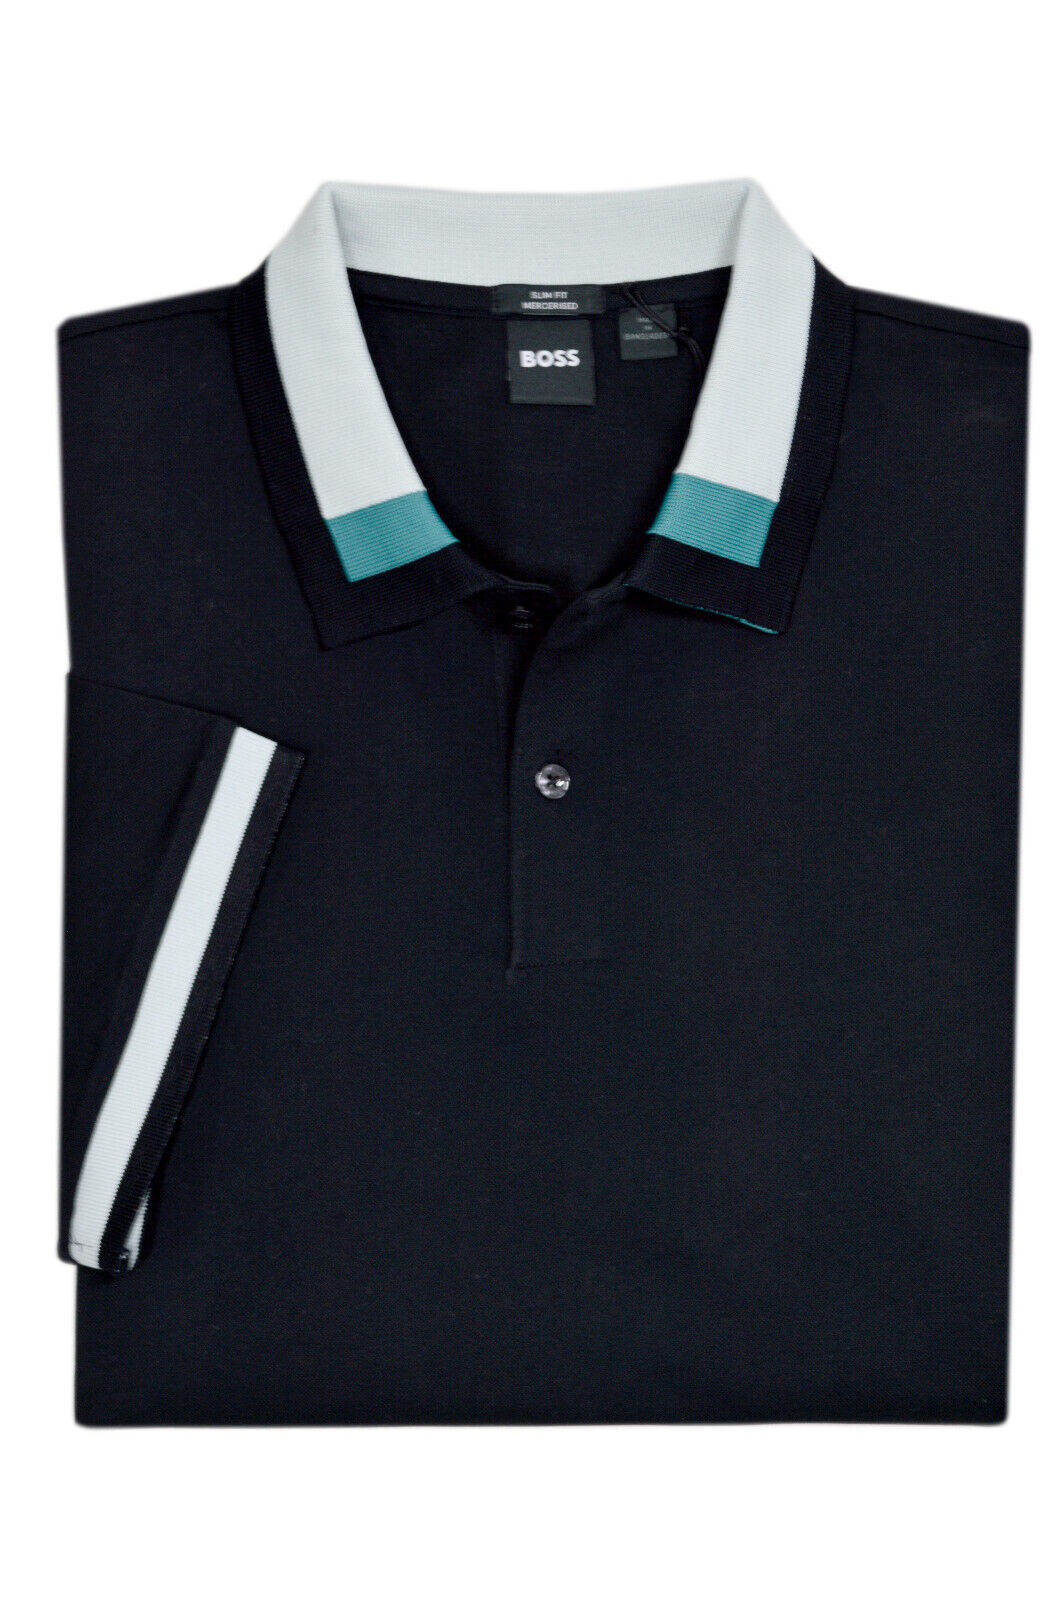 Primary image for Hugo Boss Black Teal Colorblock Collar Slim Fit Polo Shirt, Medium M, HB-080